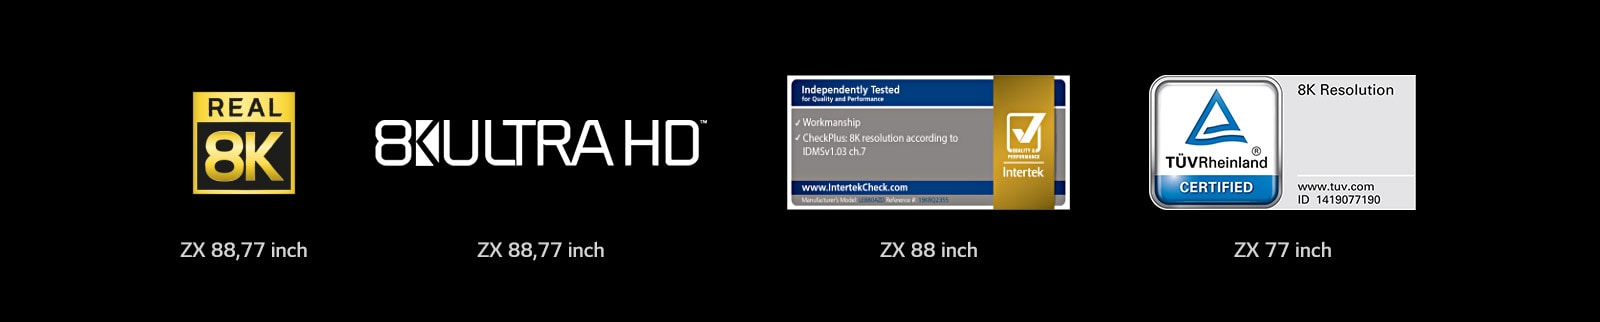 TV-OLED-Brandsite-Cinema-06-Desktop